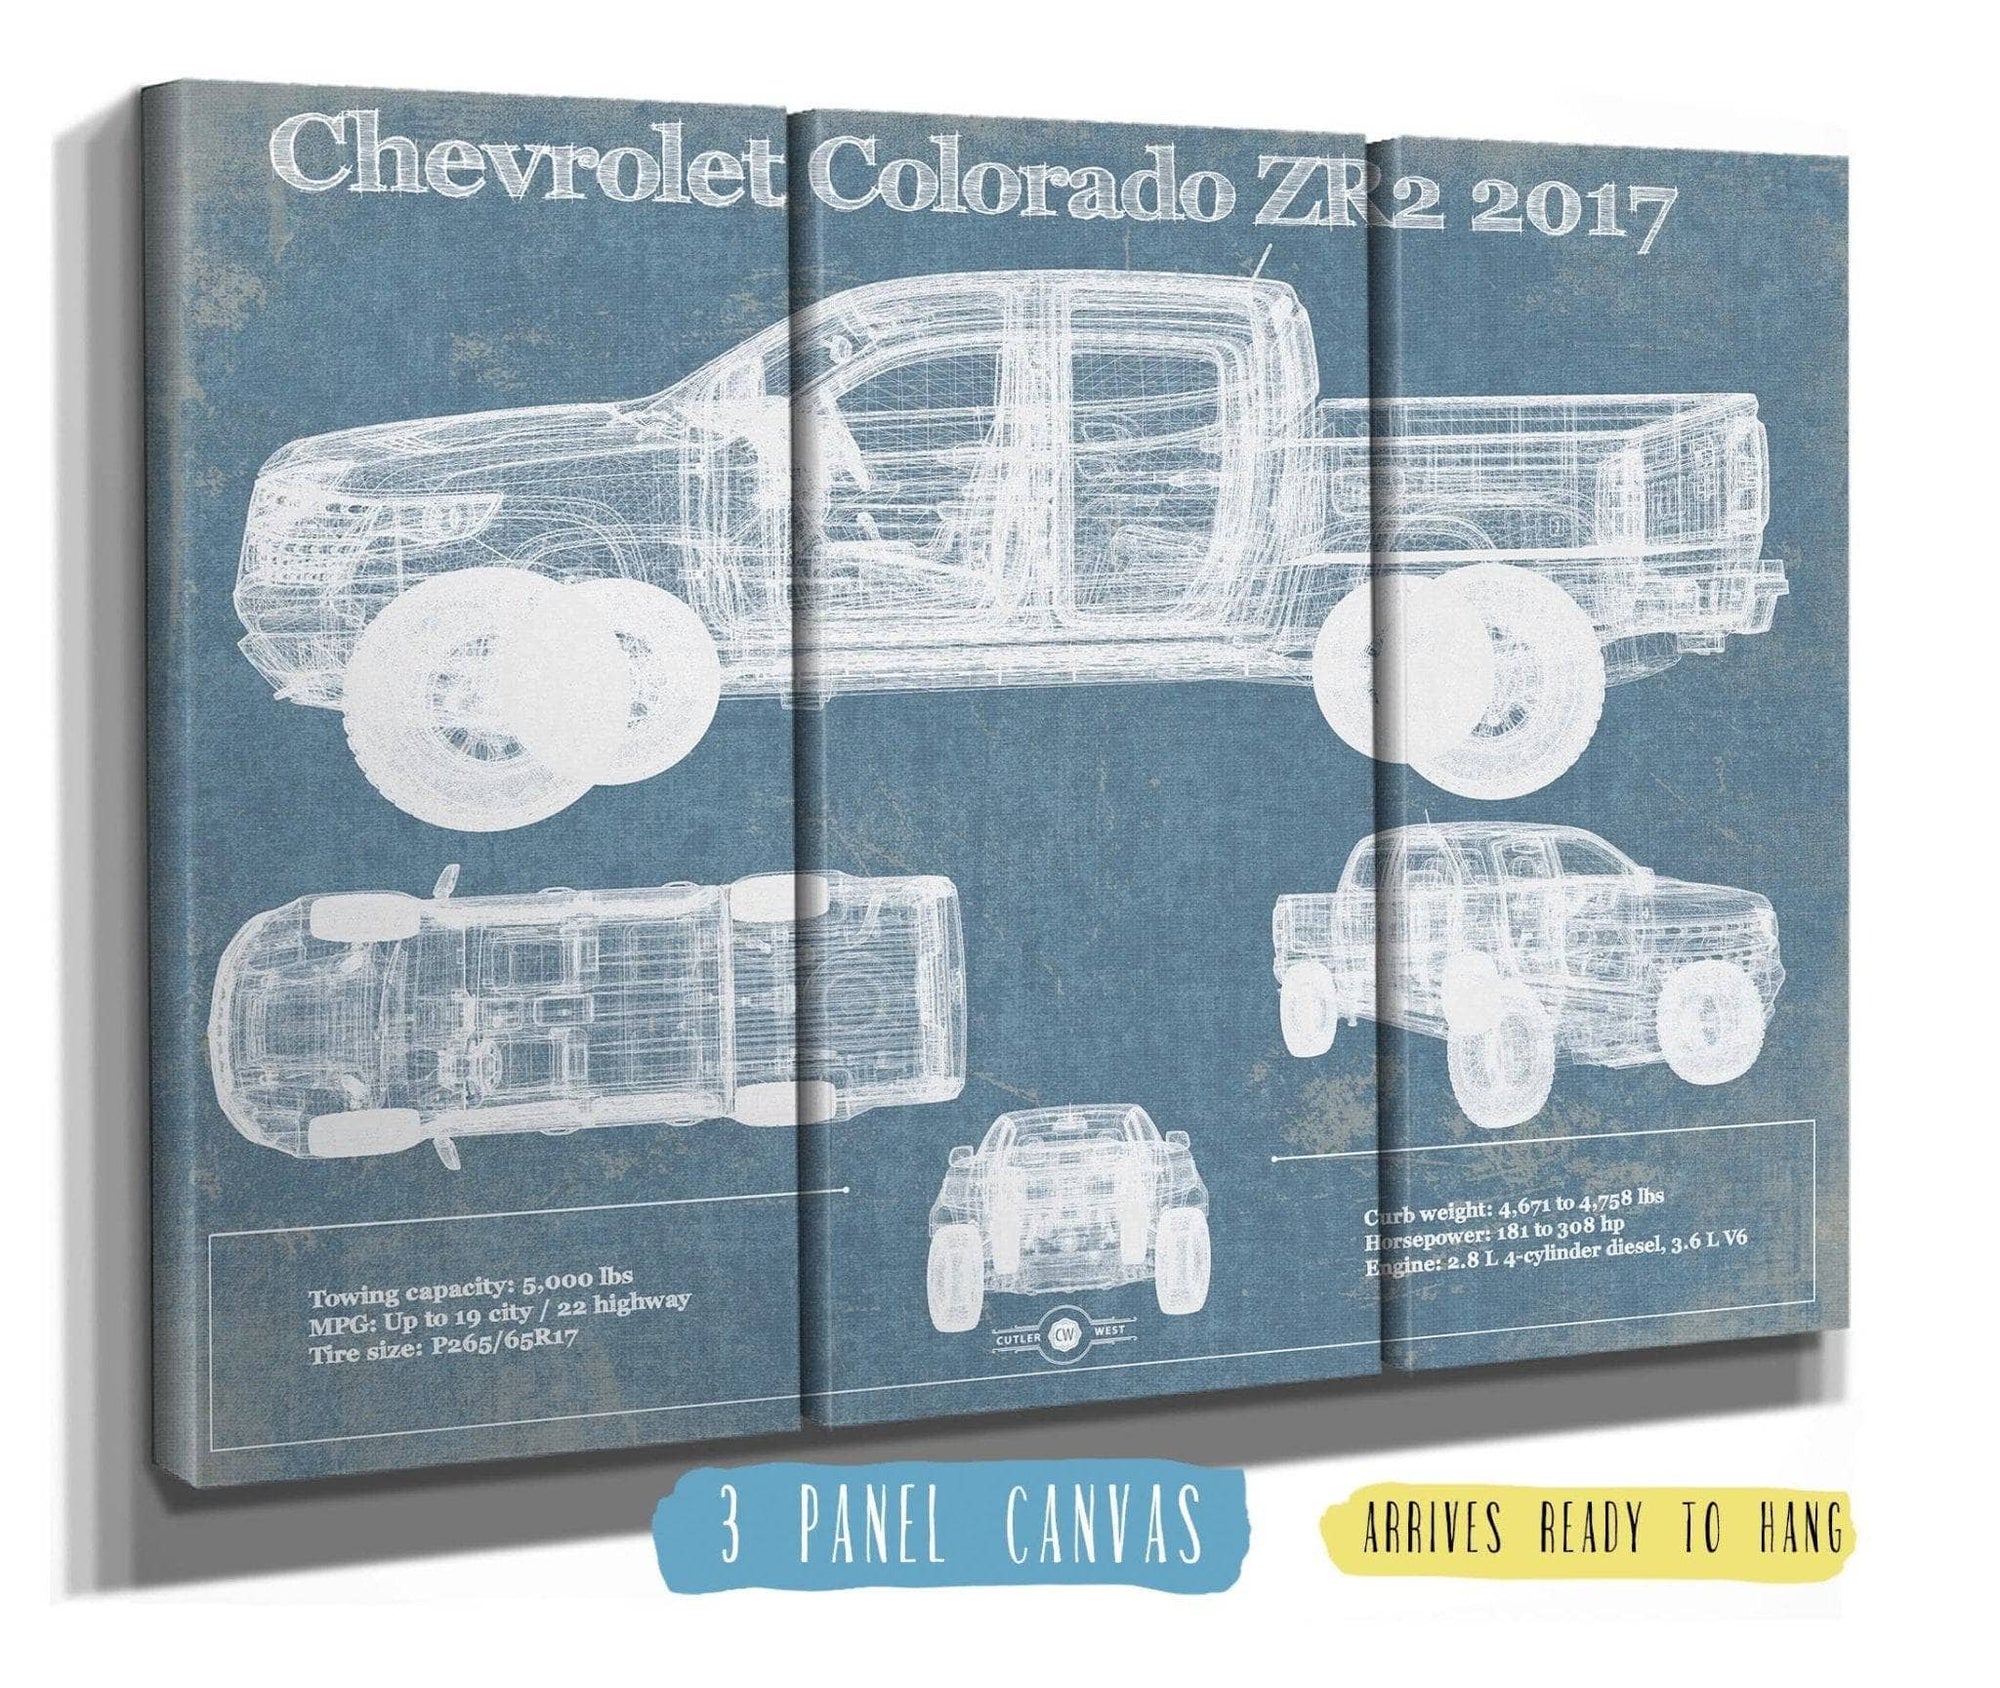 Cutler West Chevrolet Collection Chevrolet Colorado ZR2 2017 Vintage Blueprint Truck Print